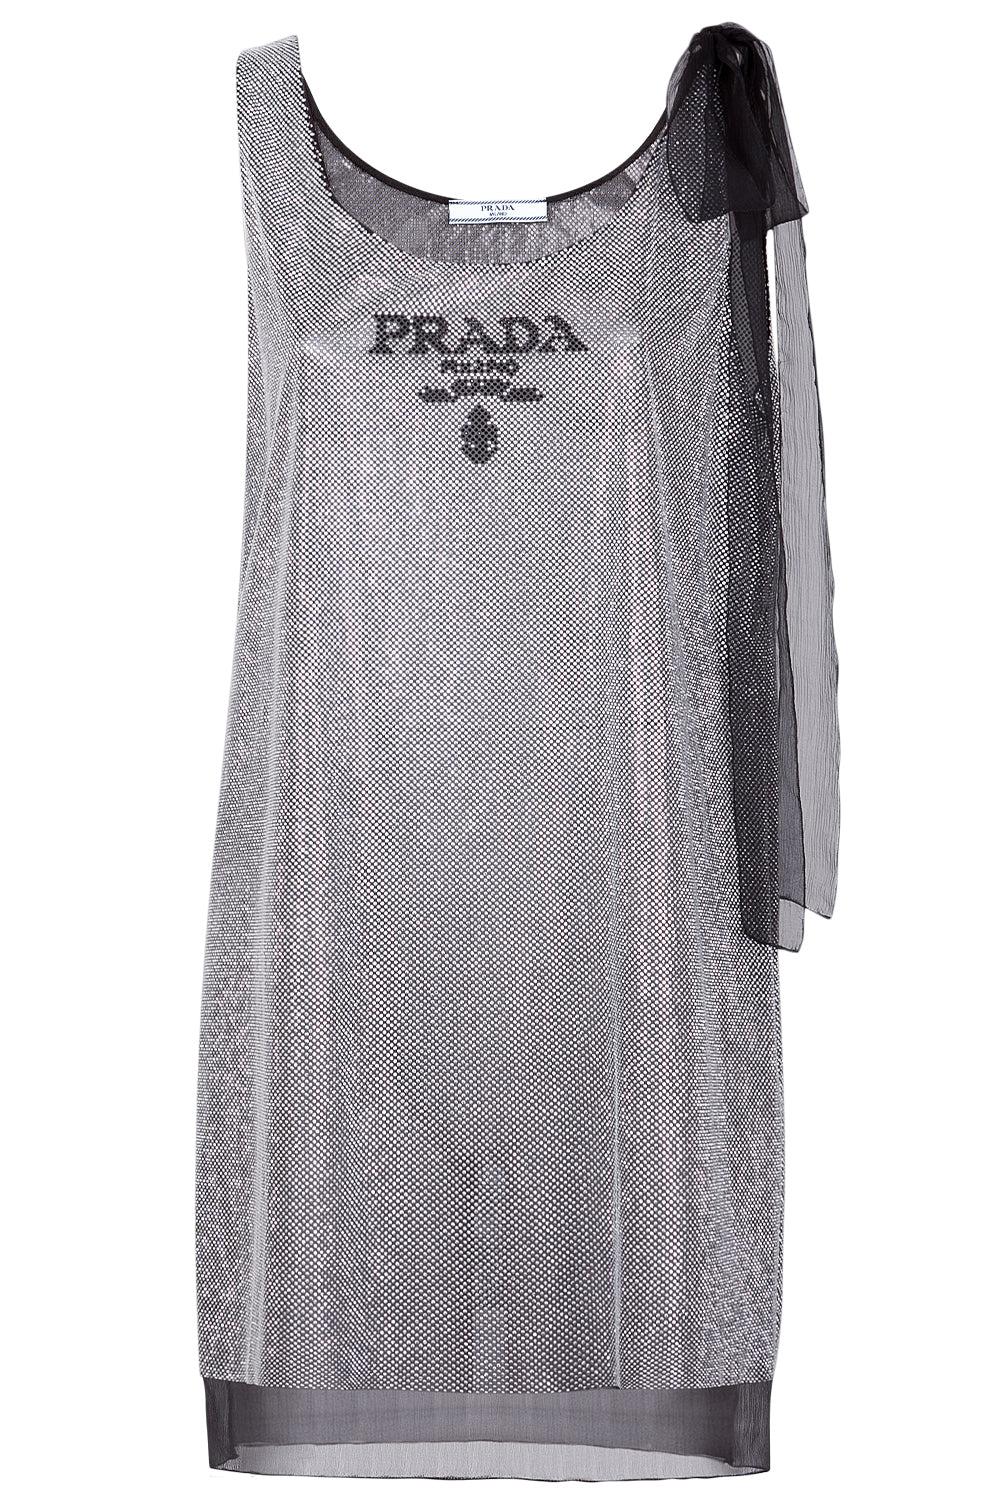 Prada Rhinestone Dress Silver FW 2021 Holiday Collection